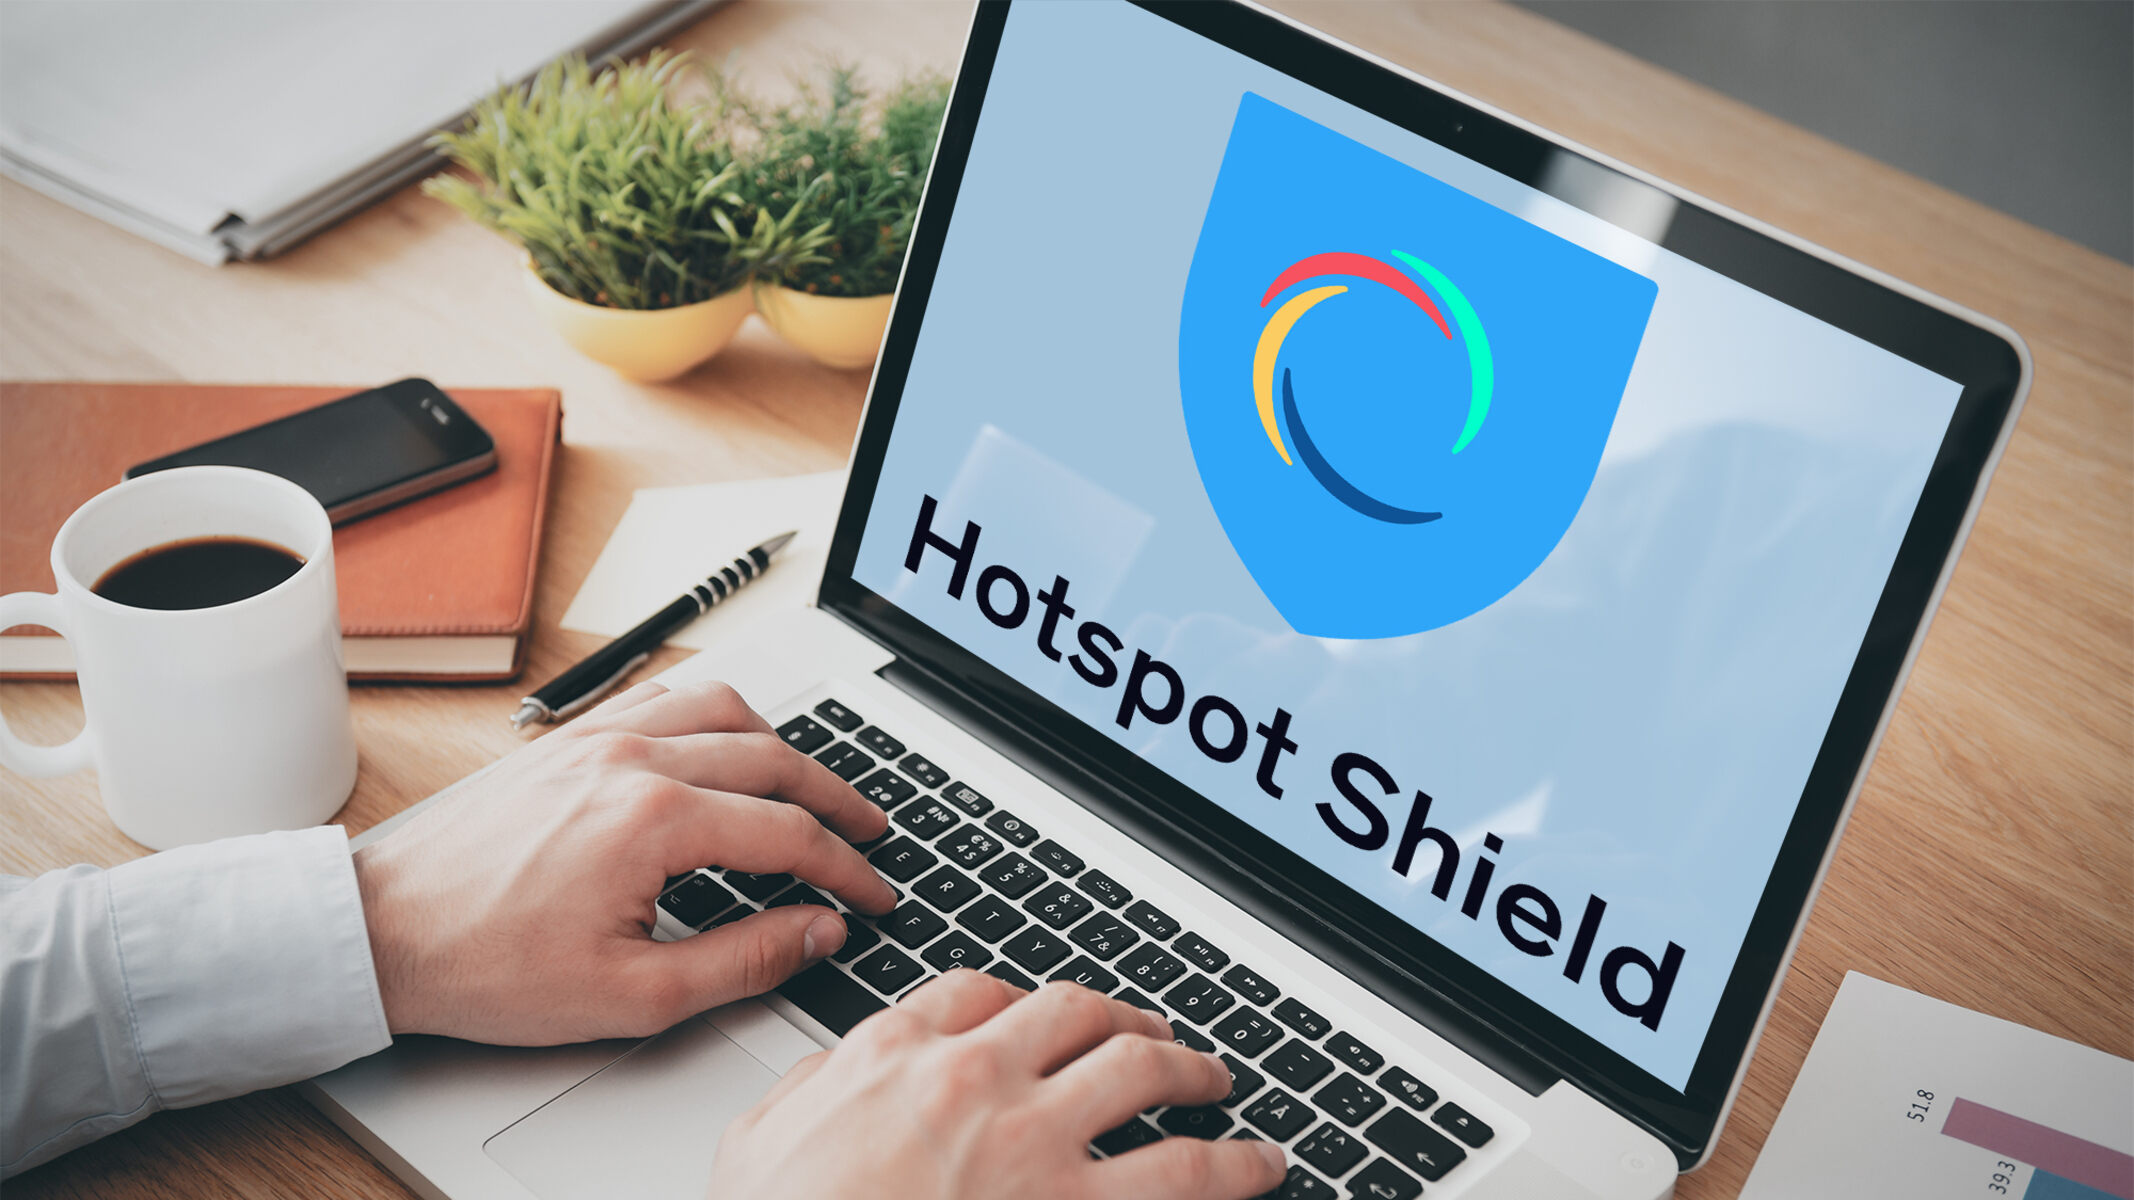 hotspot-shield-insights-understanding-its-functionality